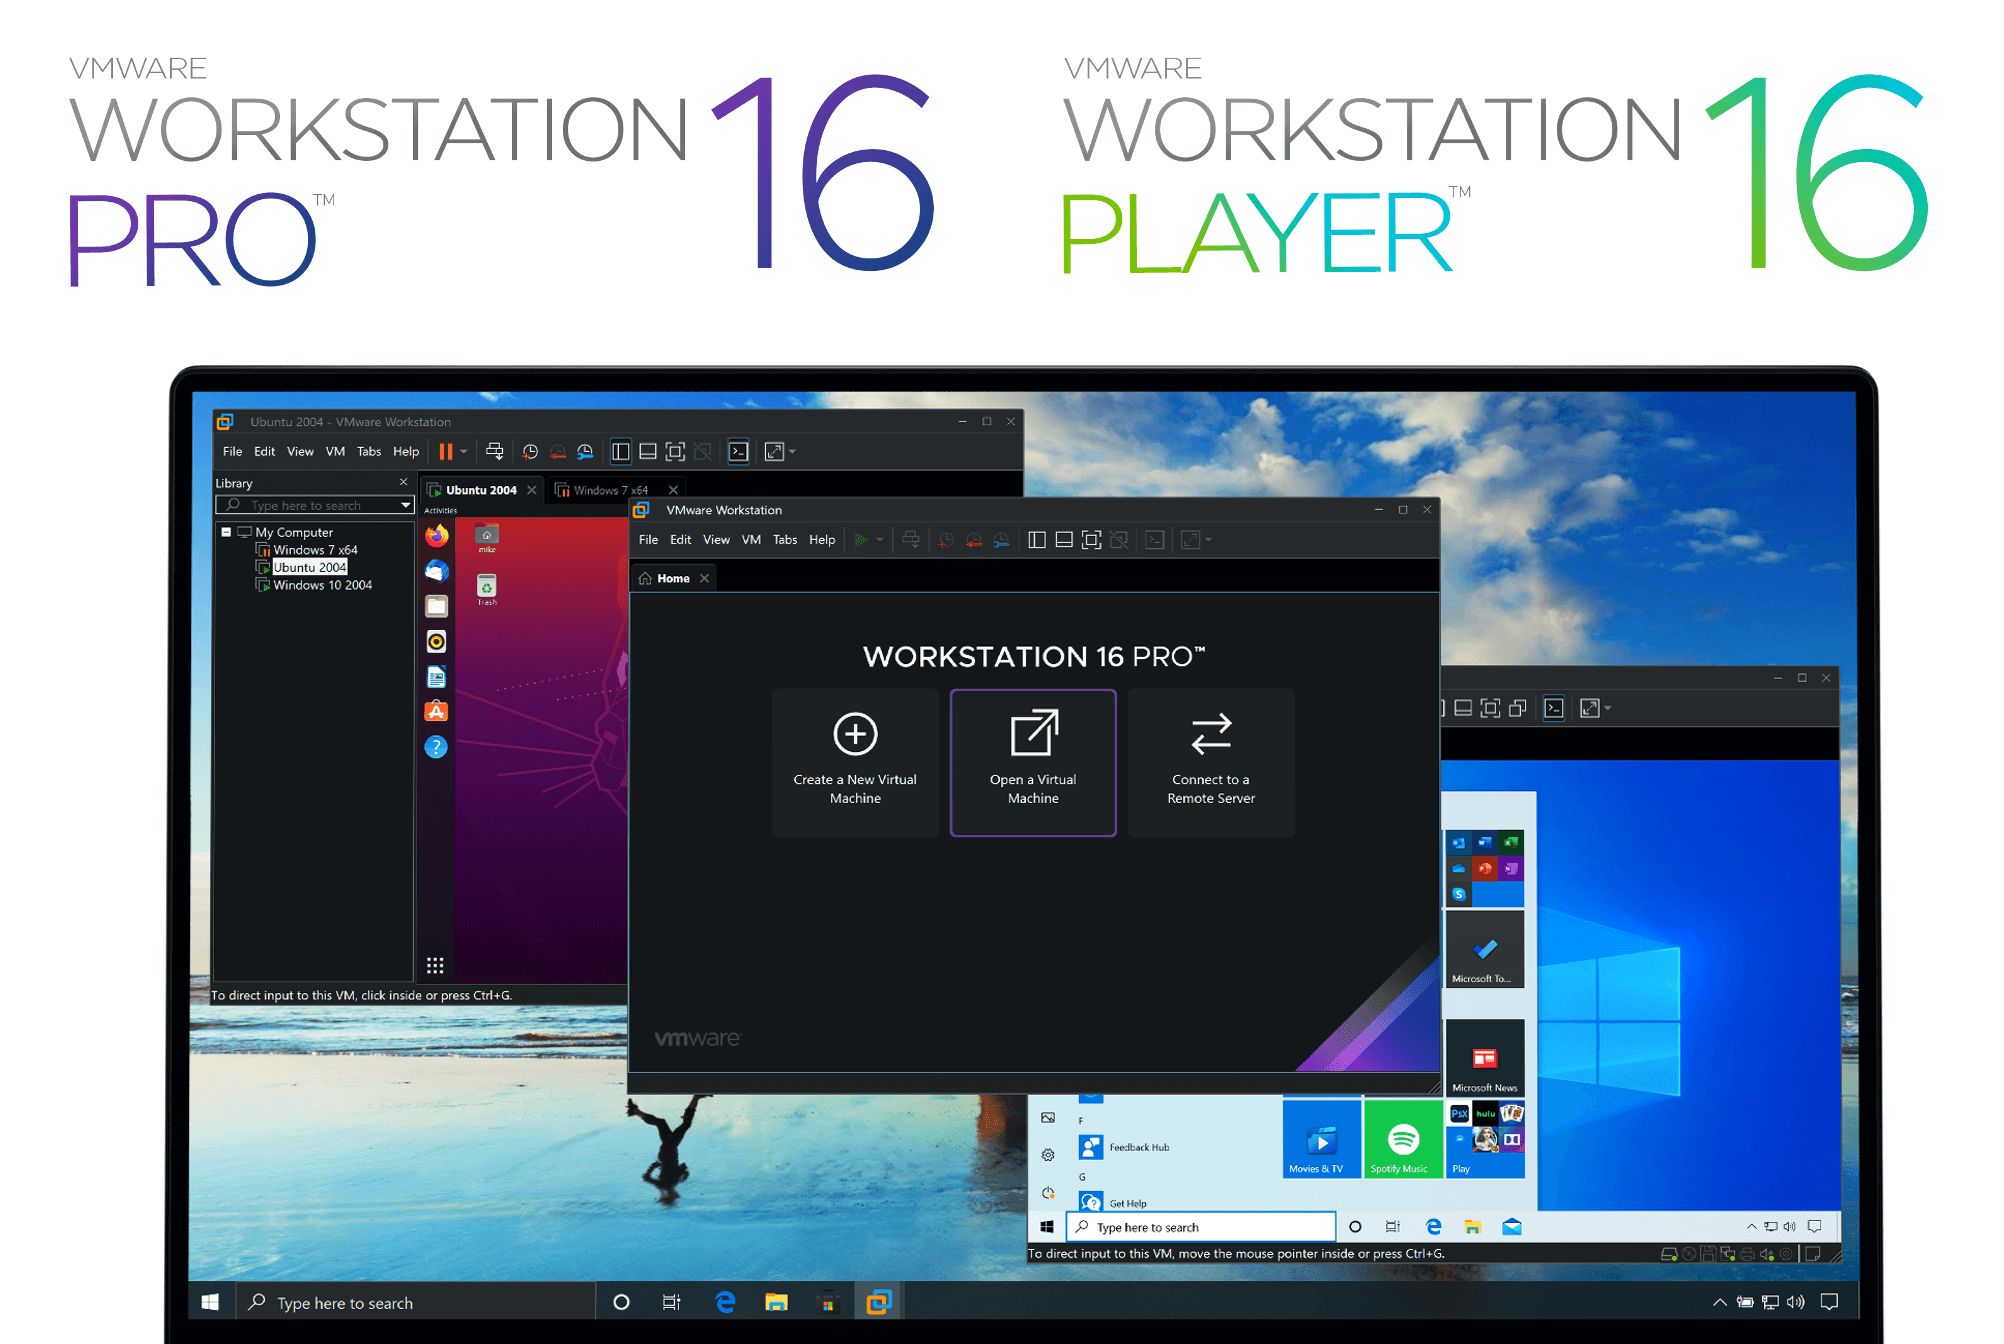 Workstation Pro and Workstation Player